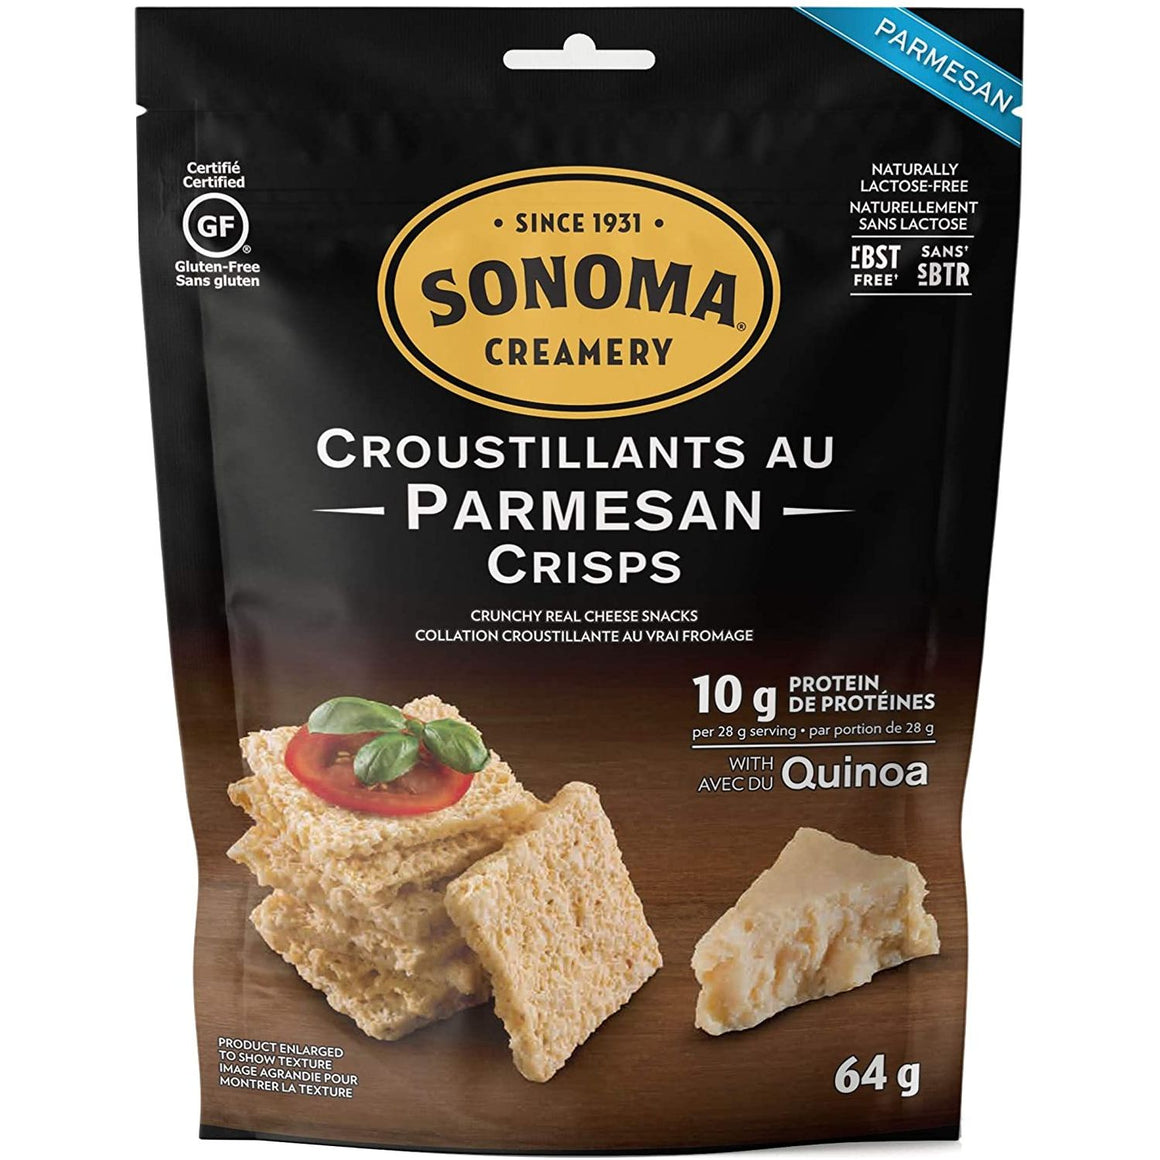 Sonoma Creamery - Crisps - Parmesan - 64g